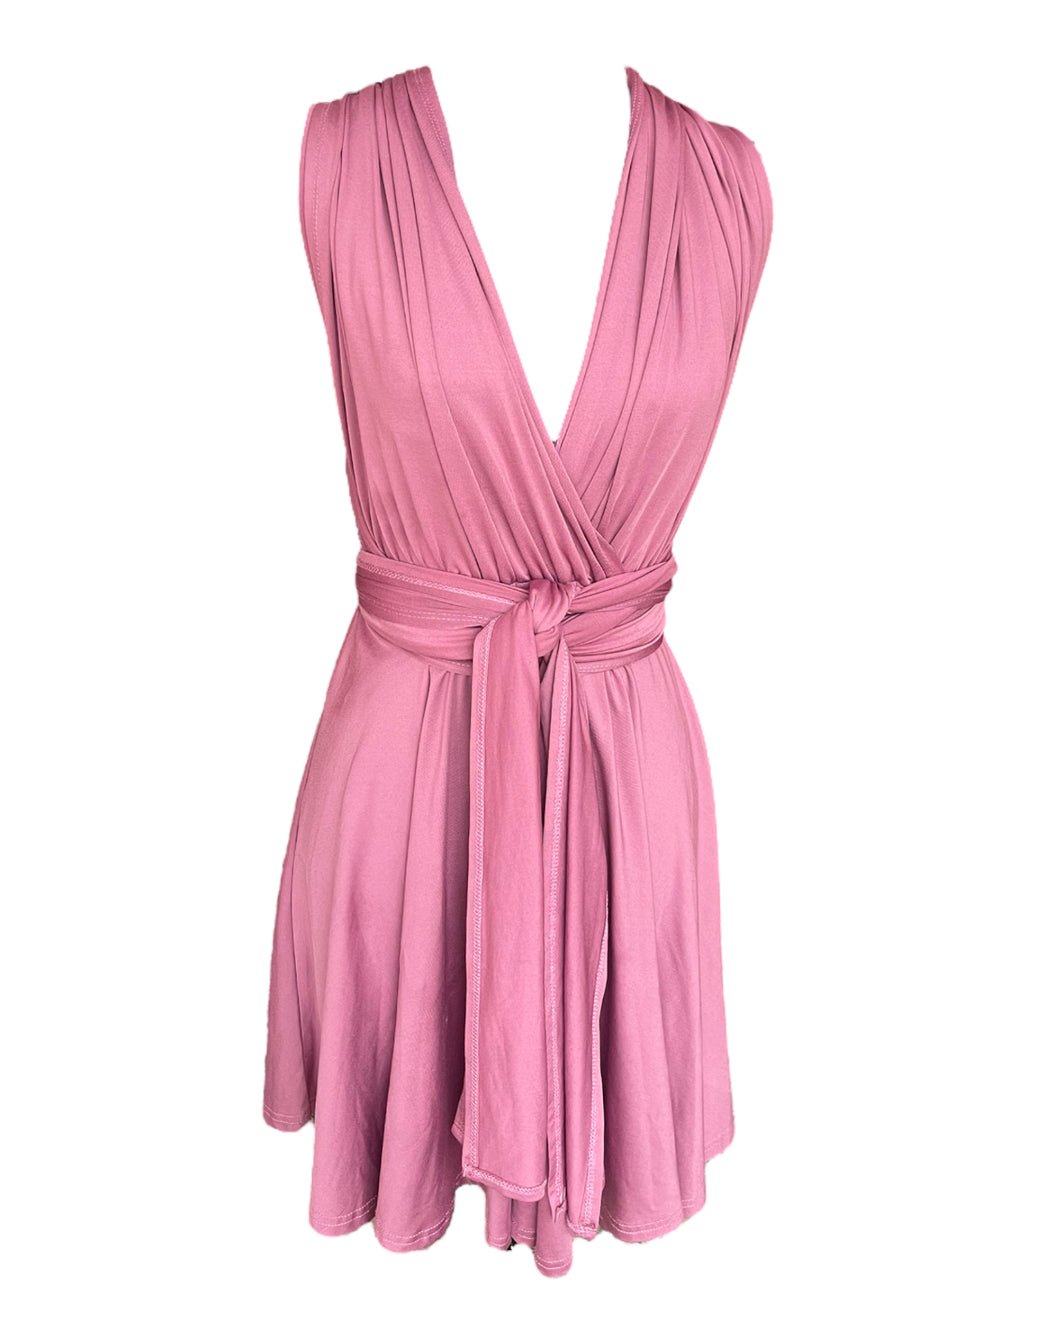 Pink Convertible Dress • M